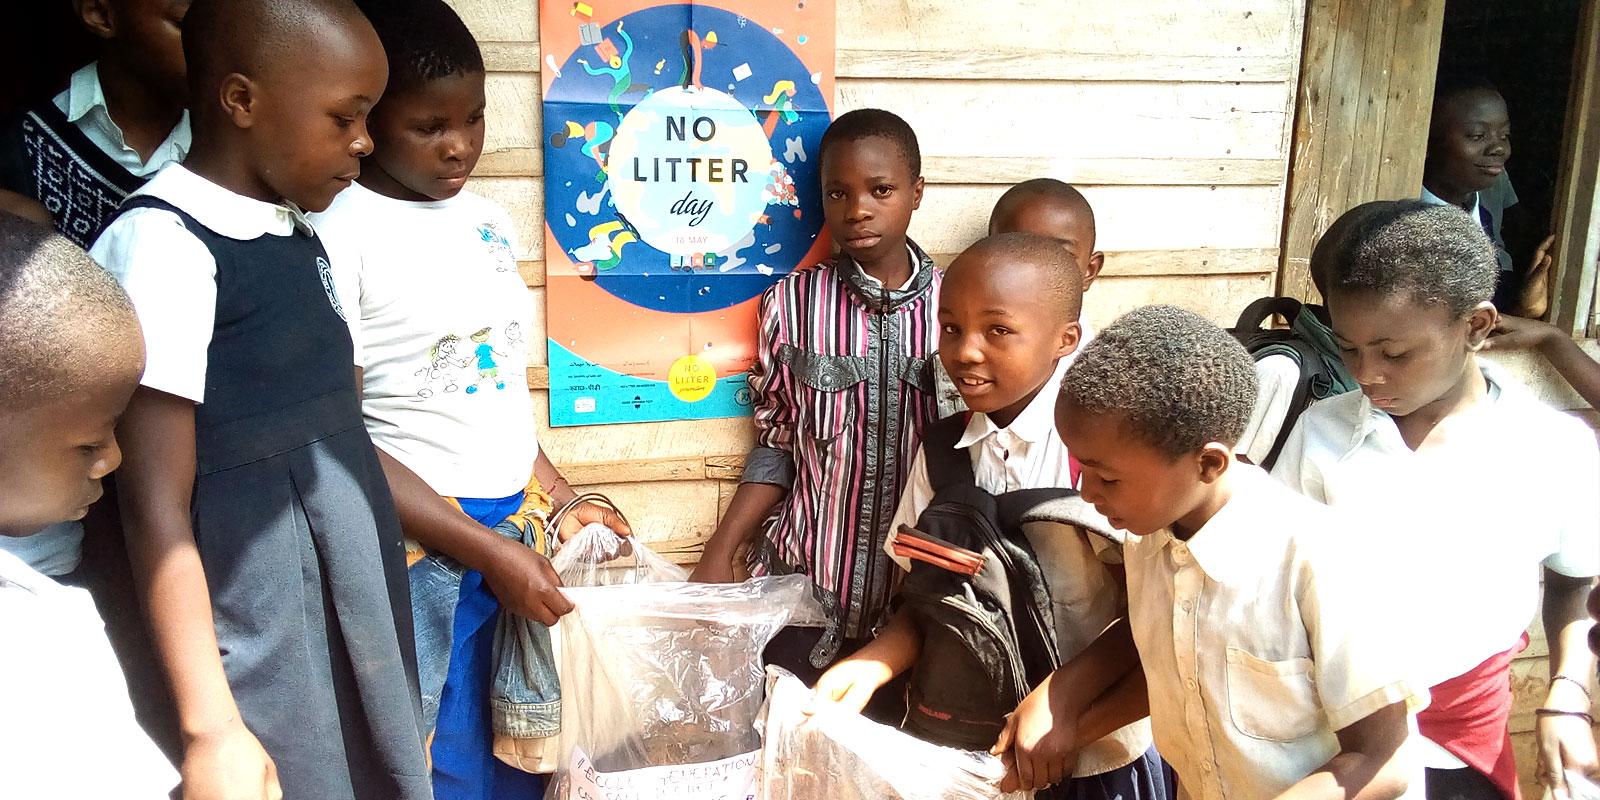 Children collecting litter